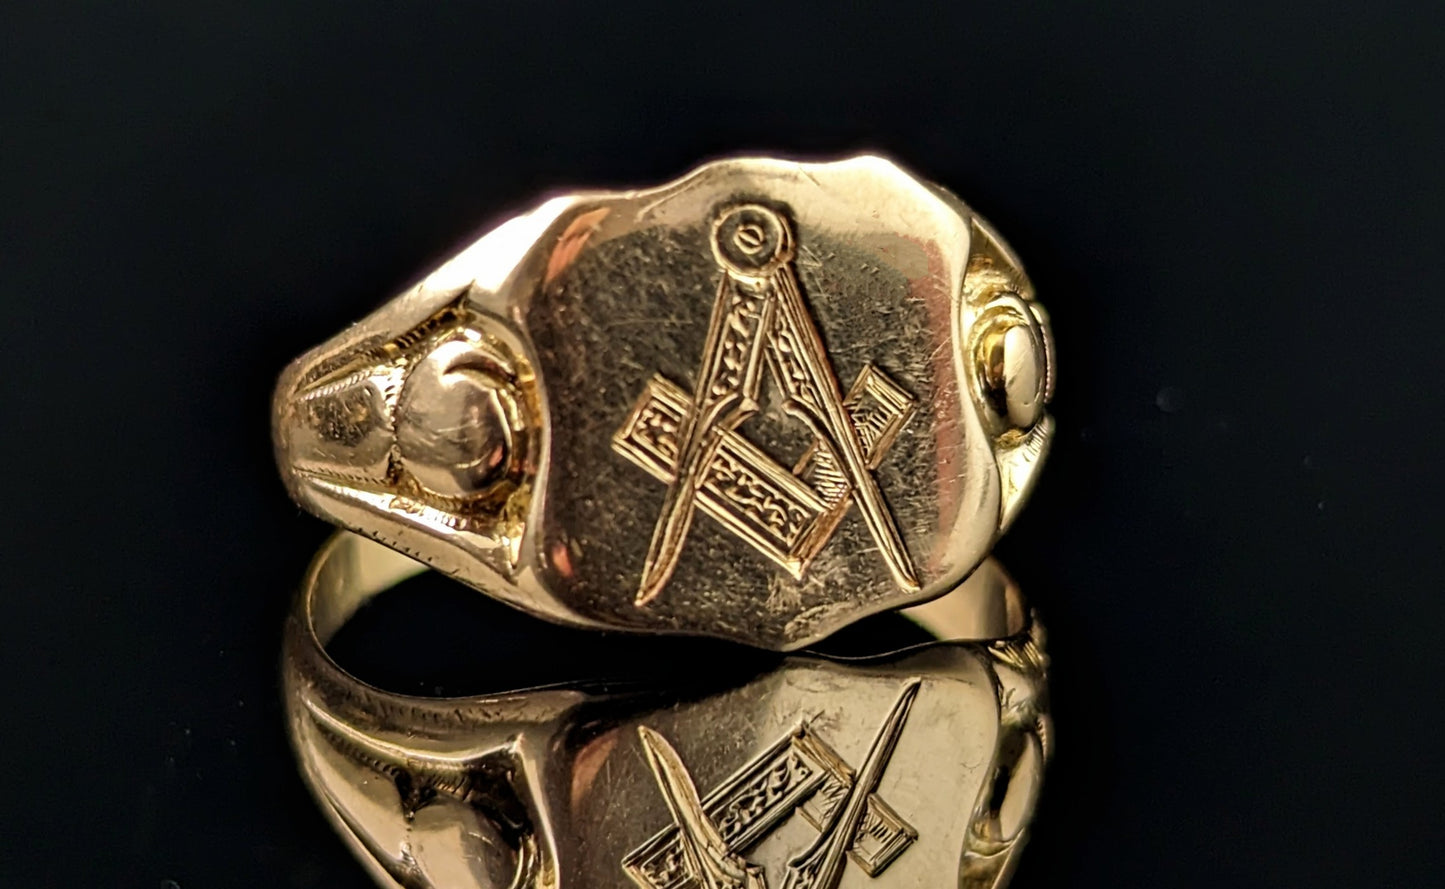 Antique 18ct gold signet ring, Masonic, shield shaped